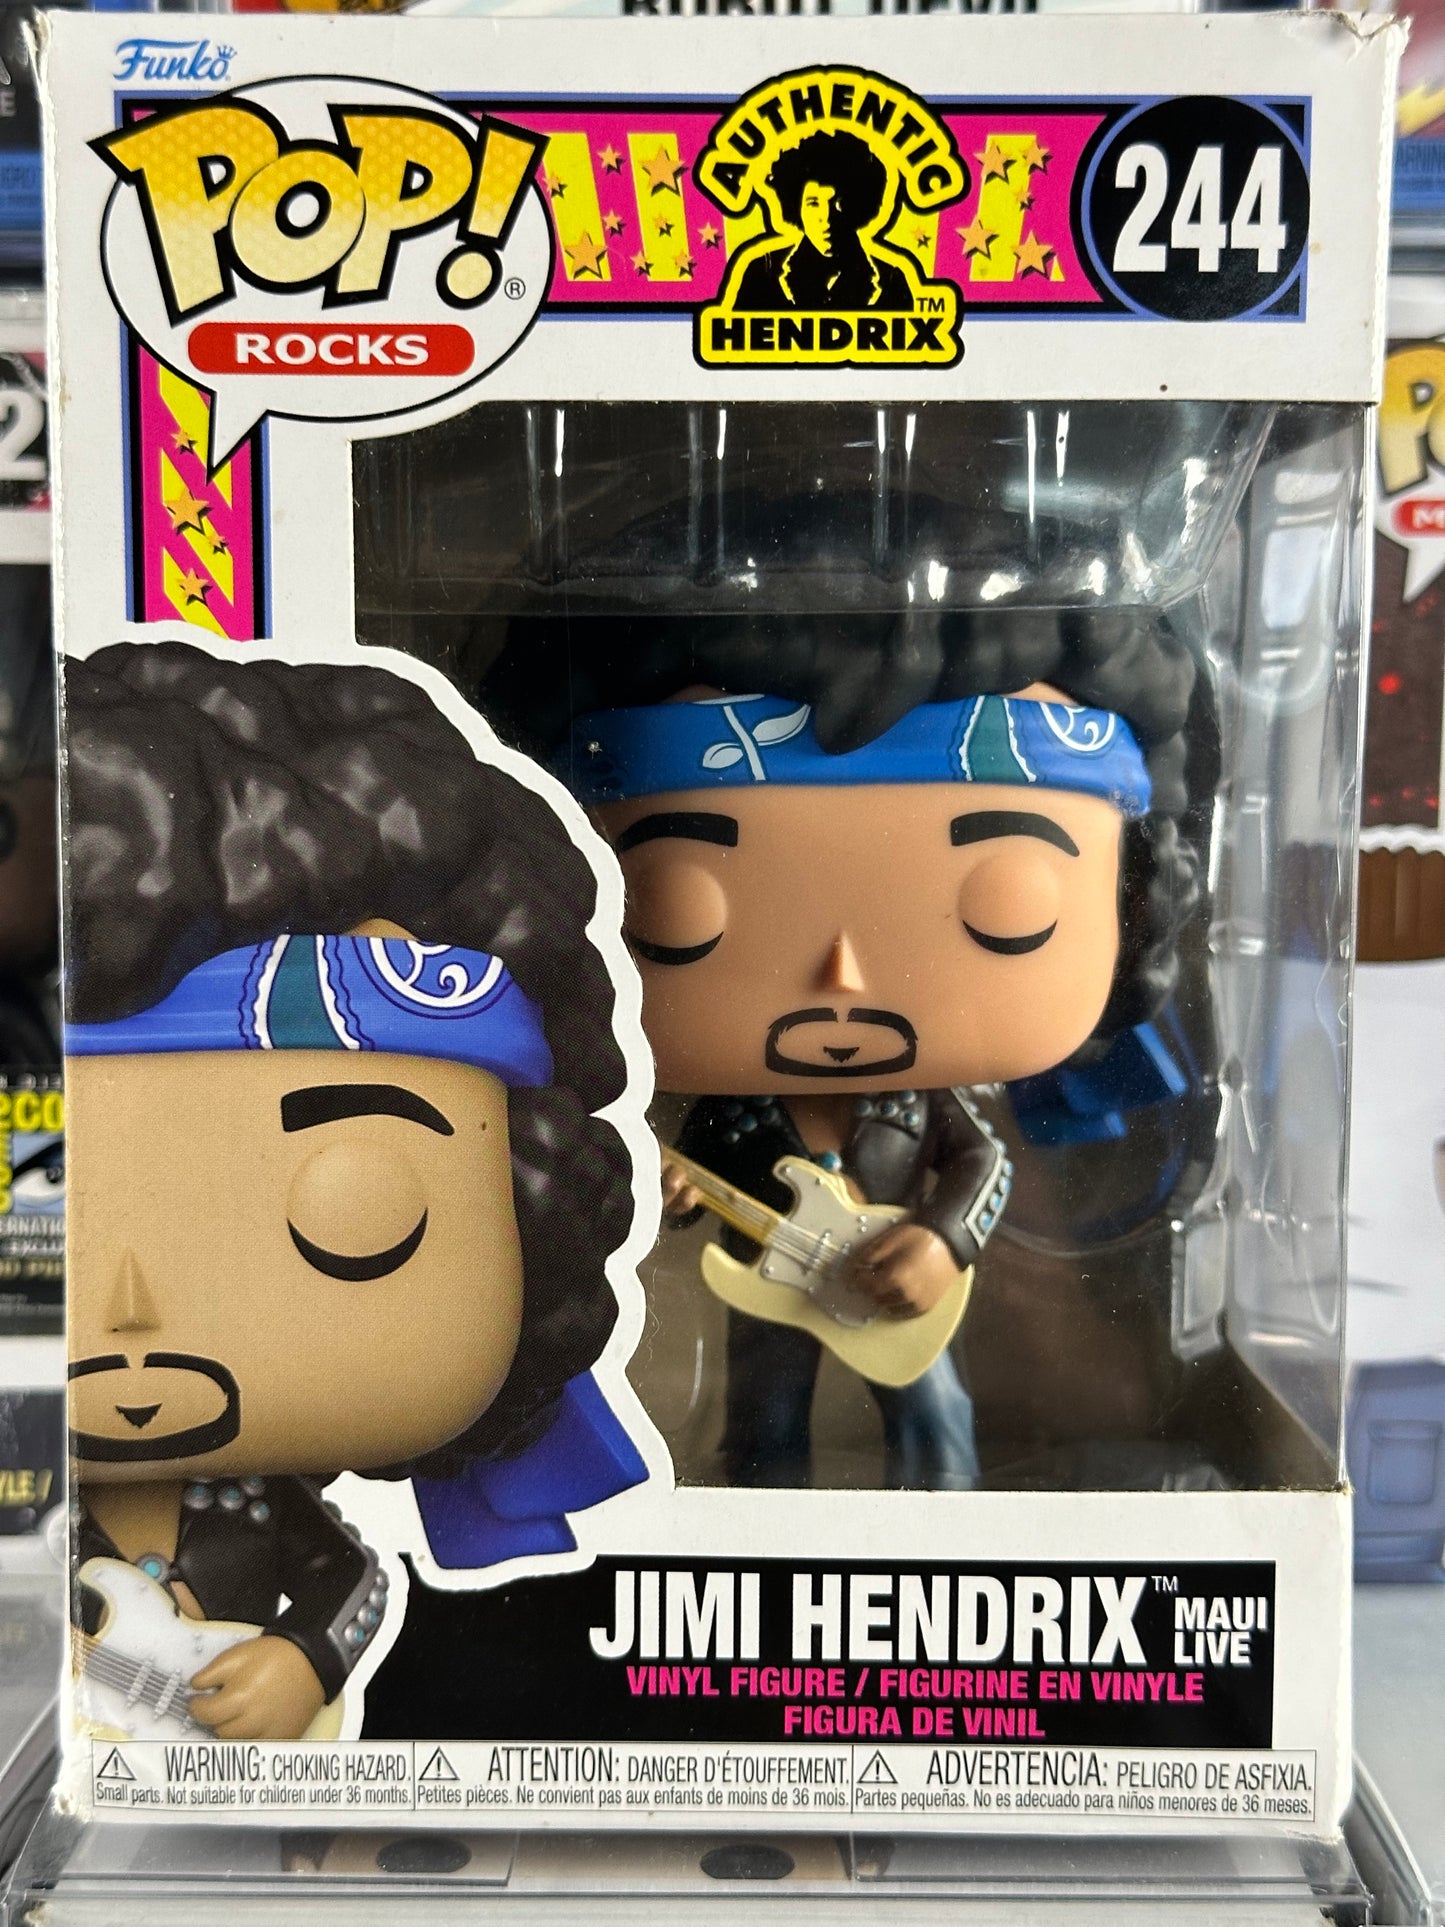 Pop Rocks - Authentic Hendrix - Jimi Hendrix (Live in Maui) (244)